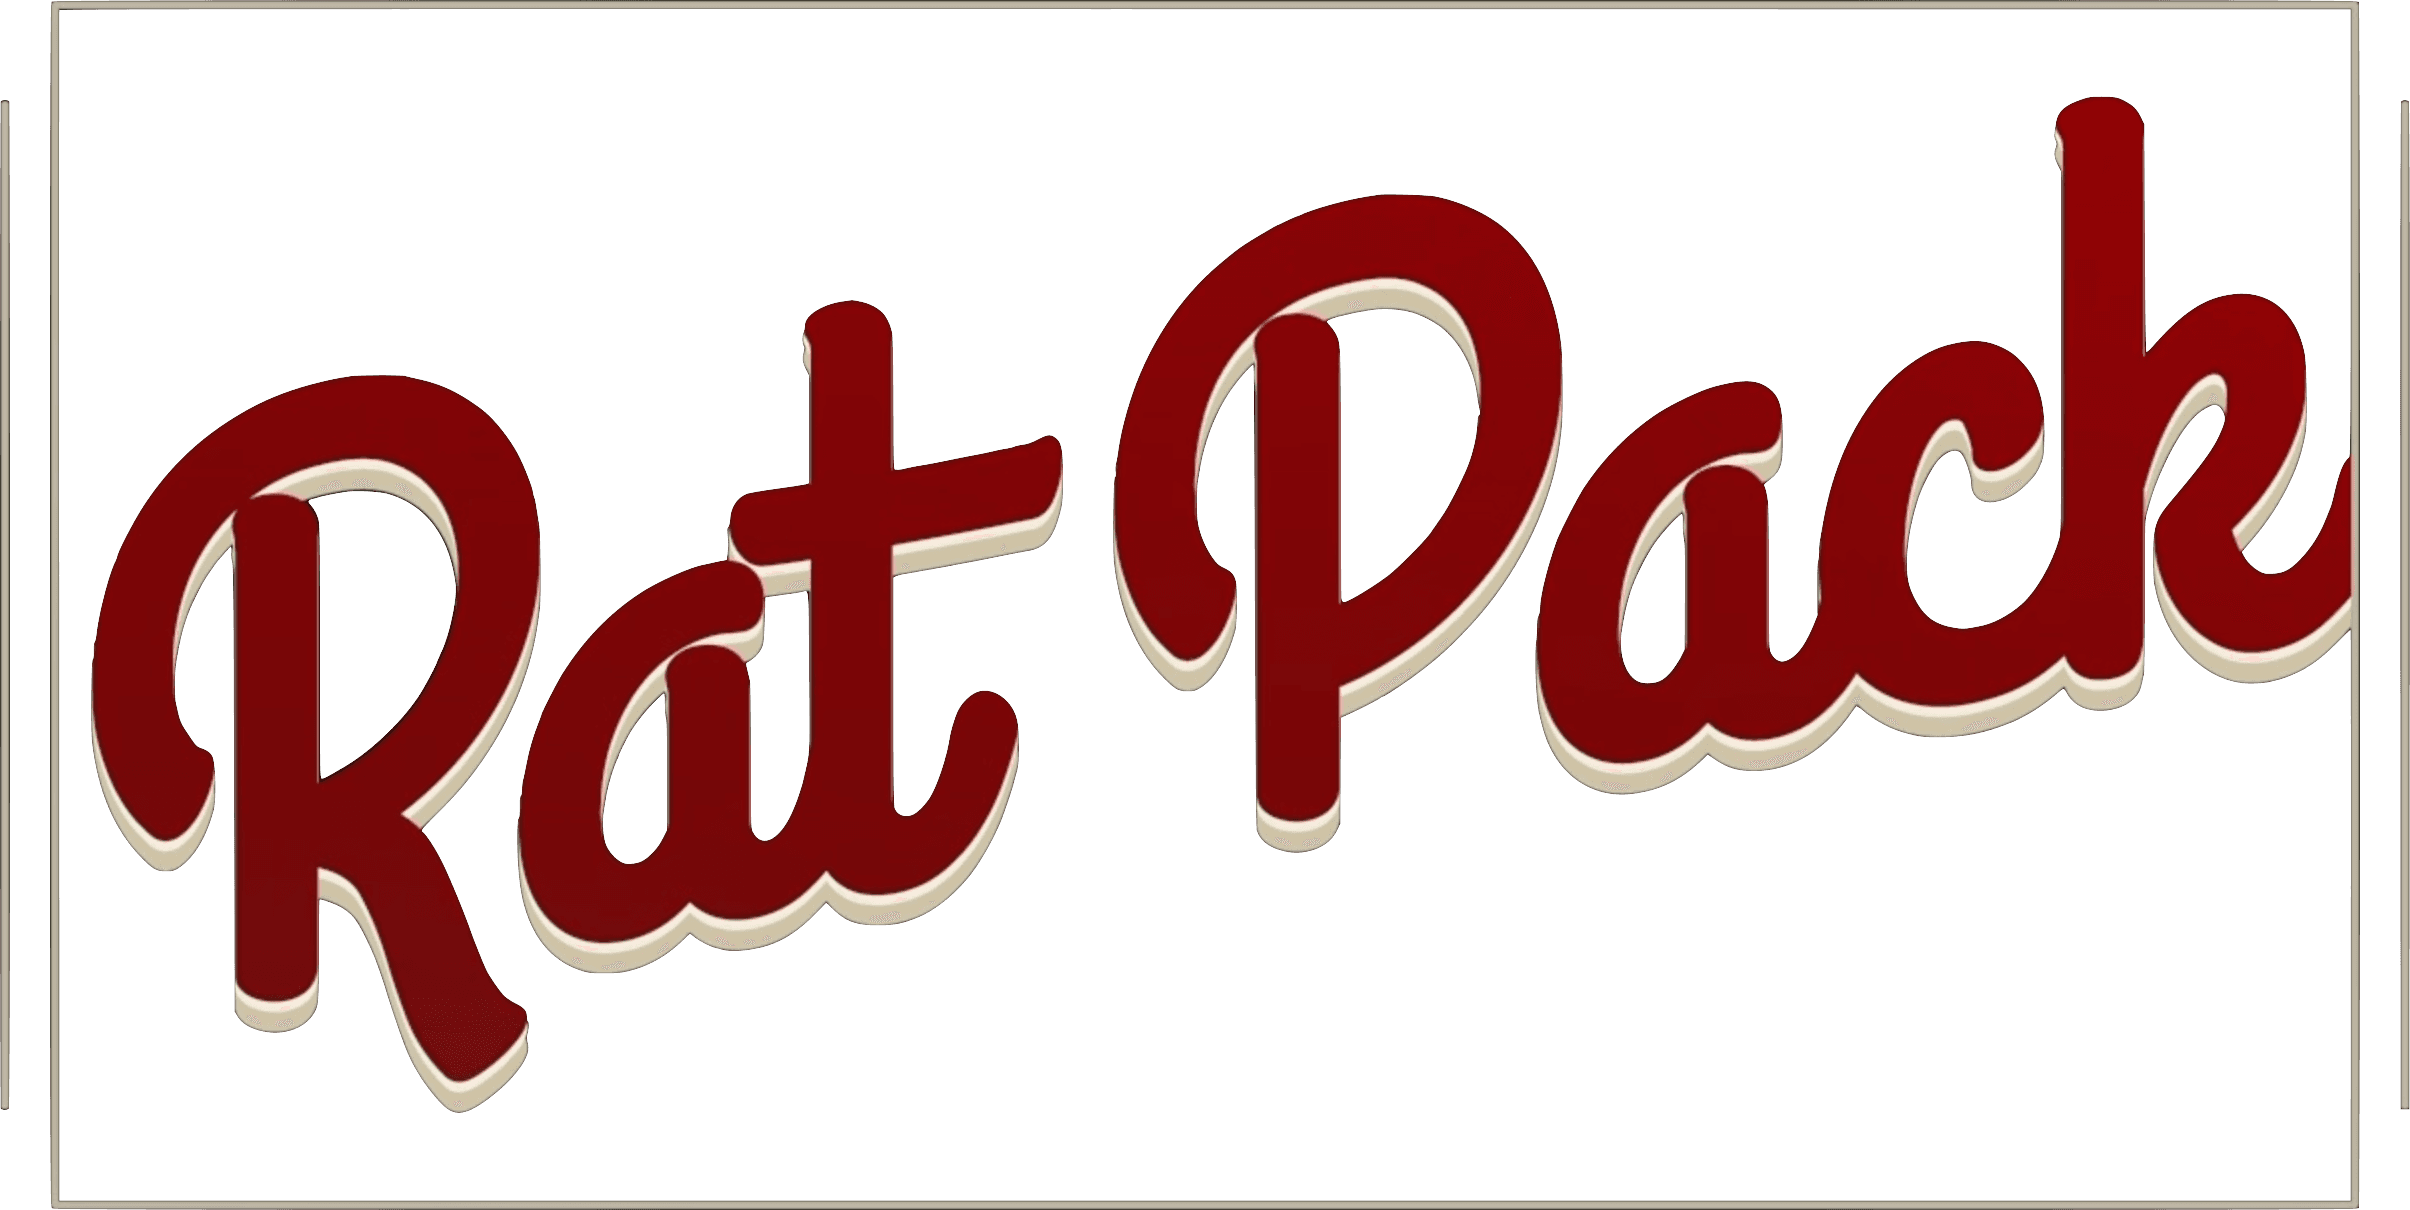 Rat Pack logo